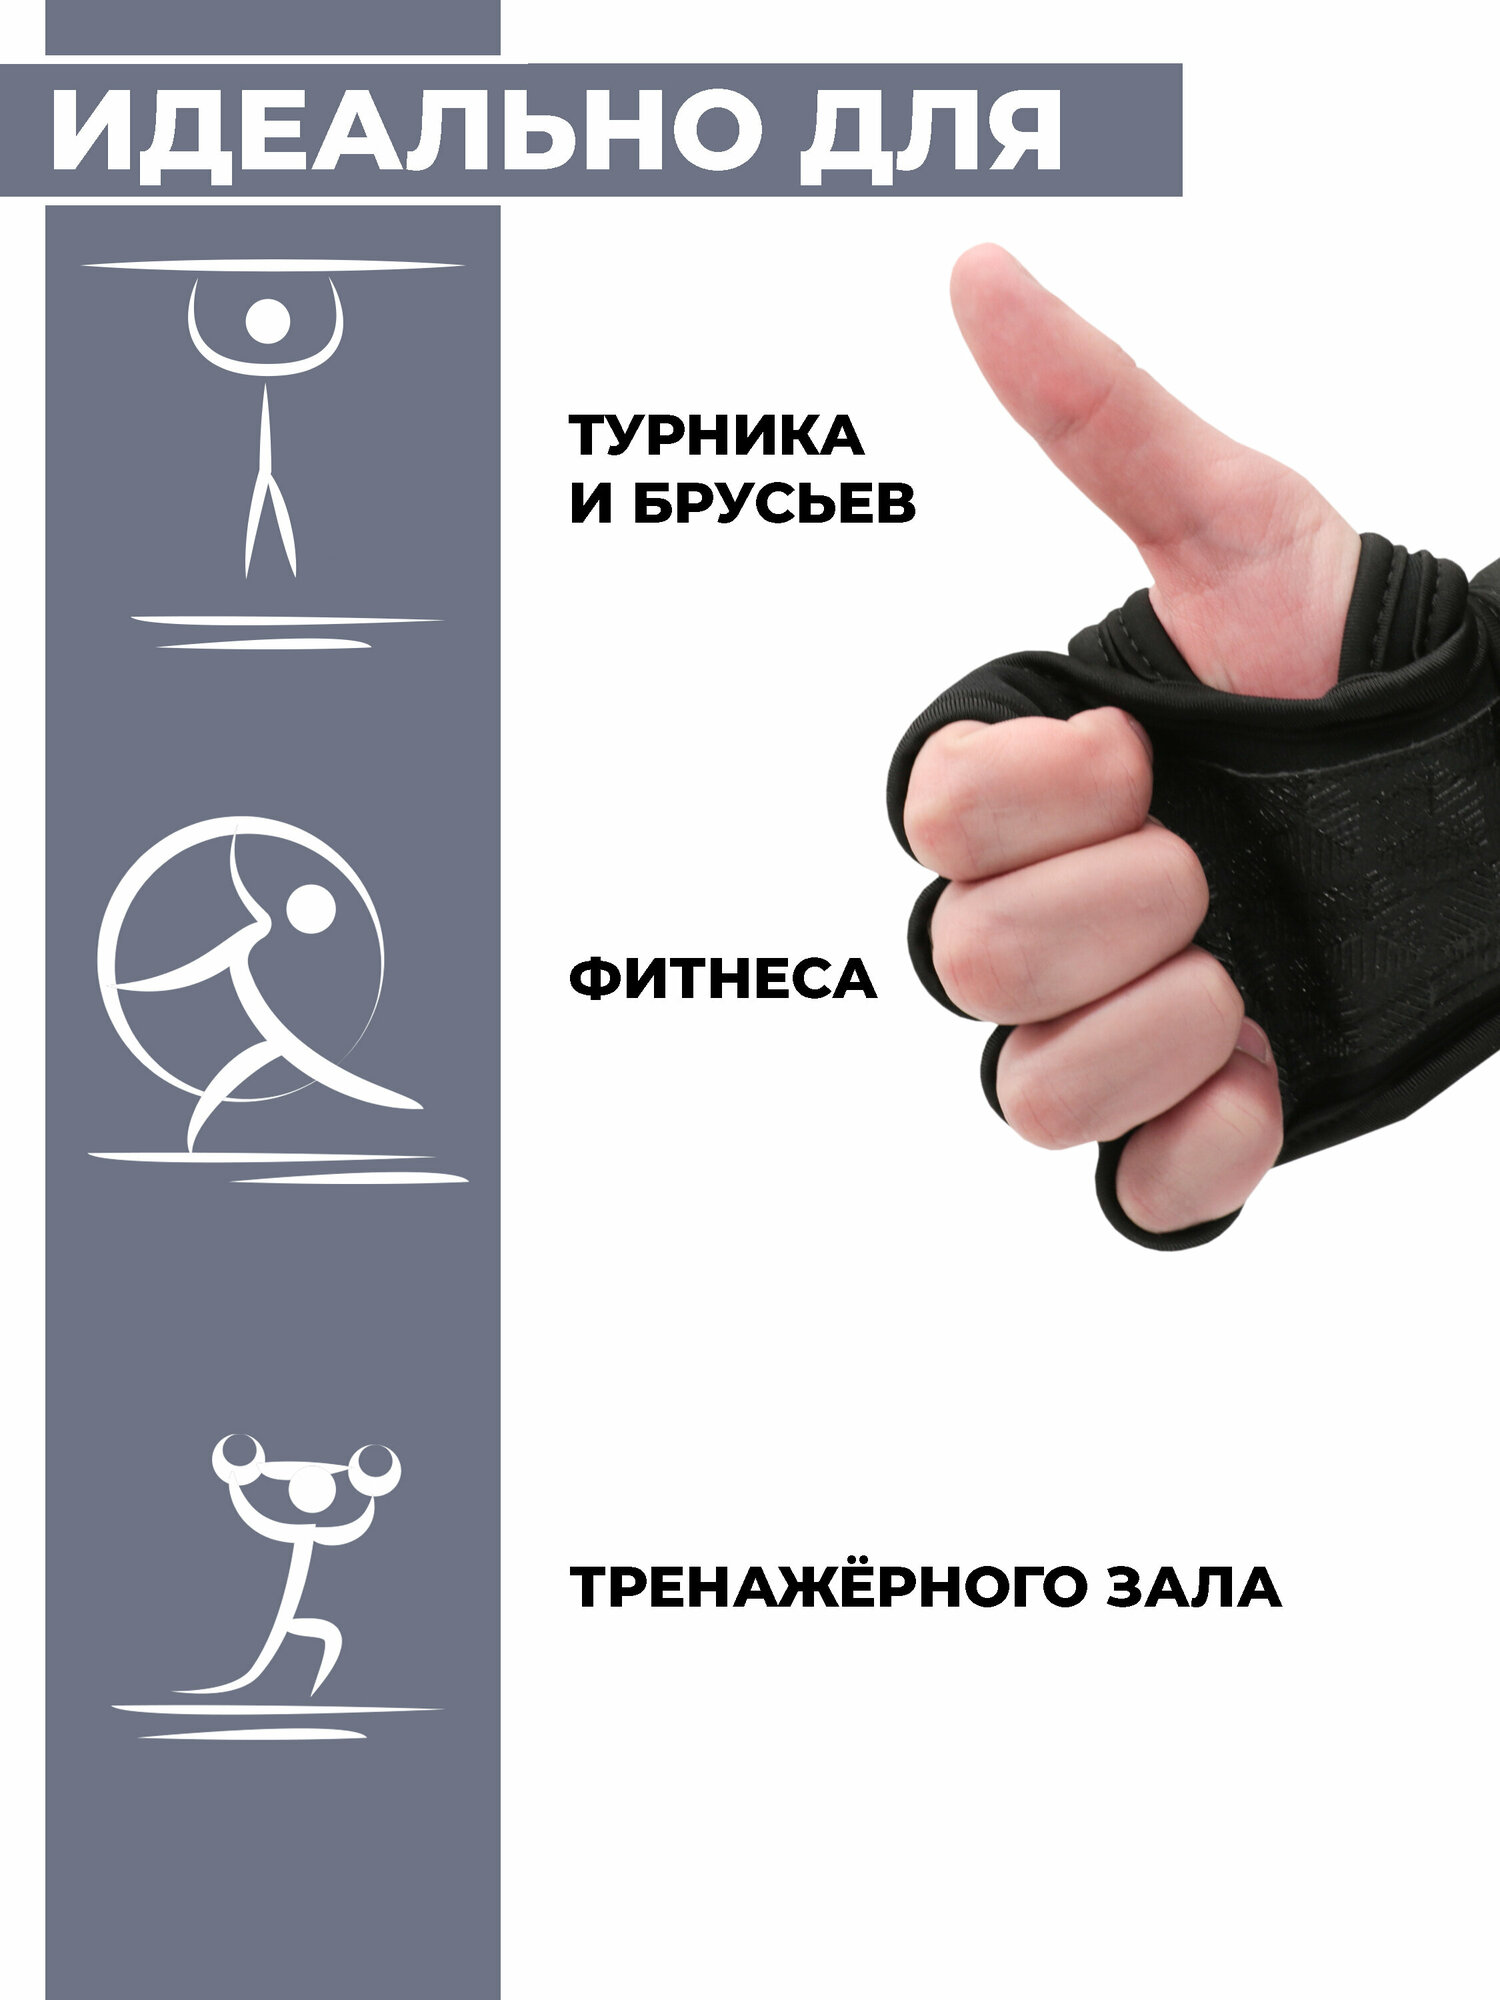 Перчатки для турника и грифа Boomshakalaka, цвет черный, размер S, обхват ладони 165-195 мм.